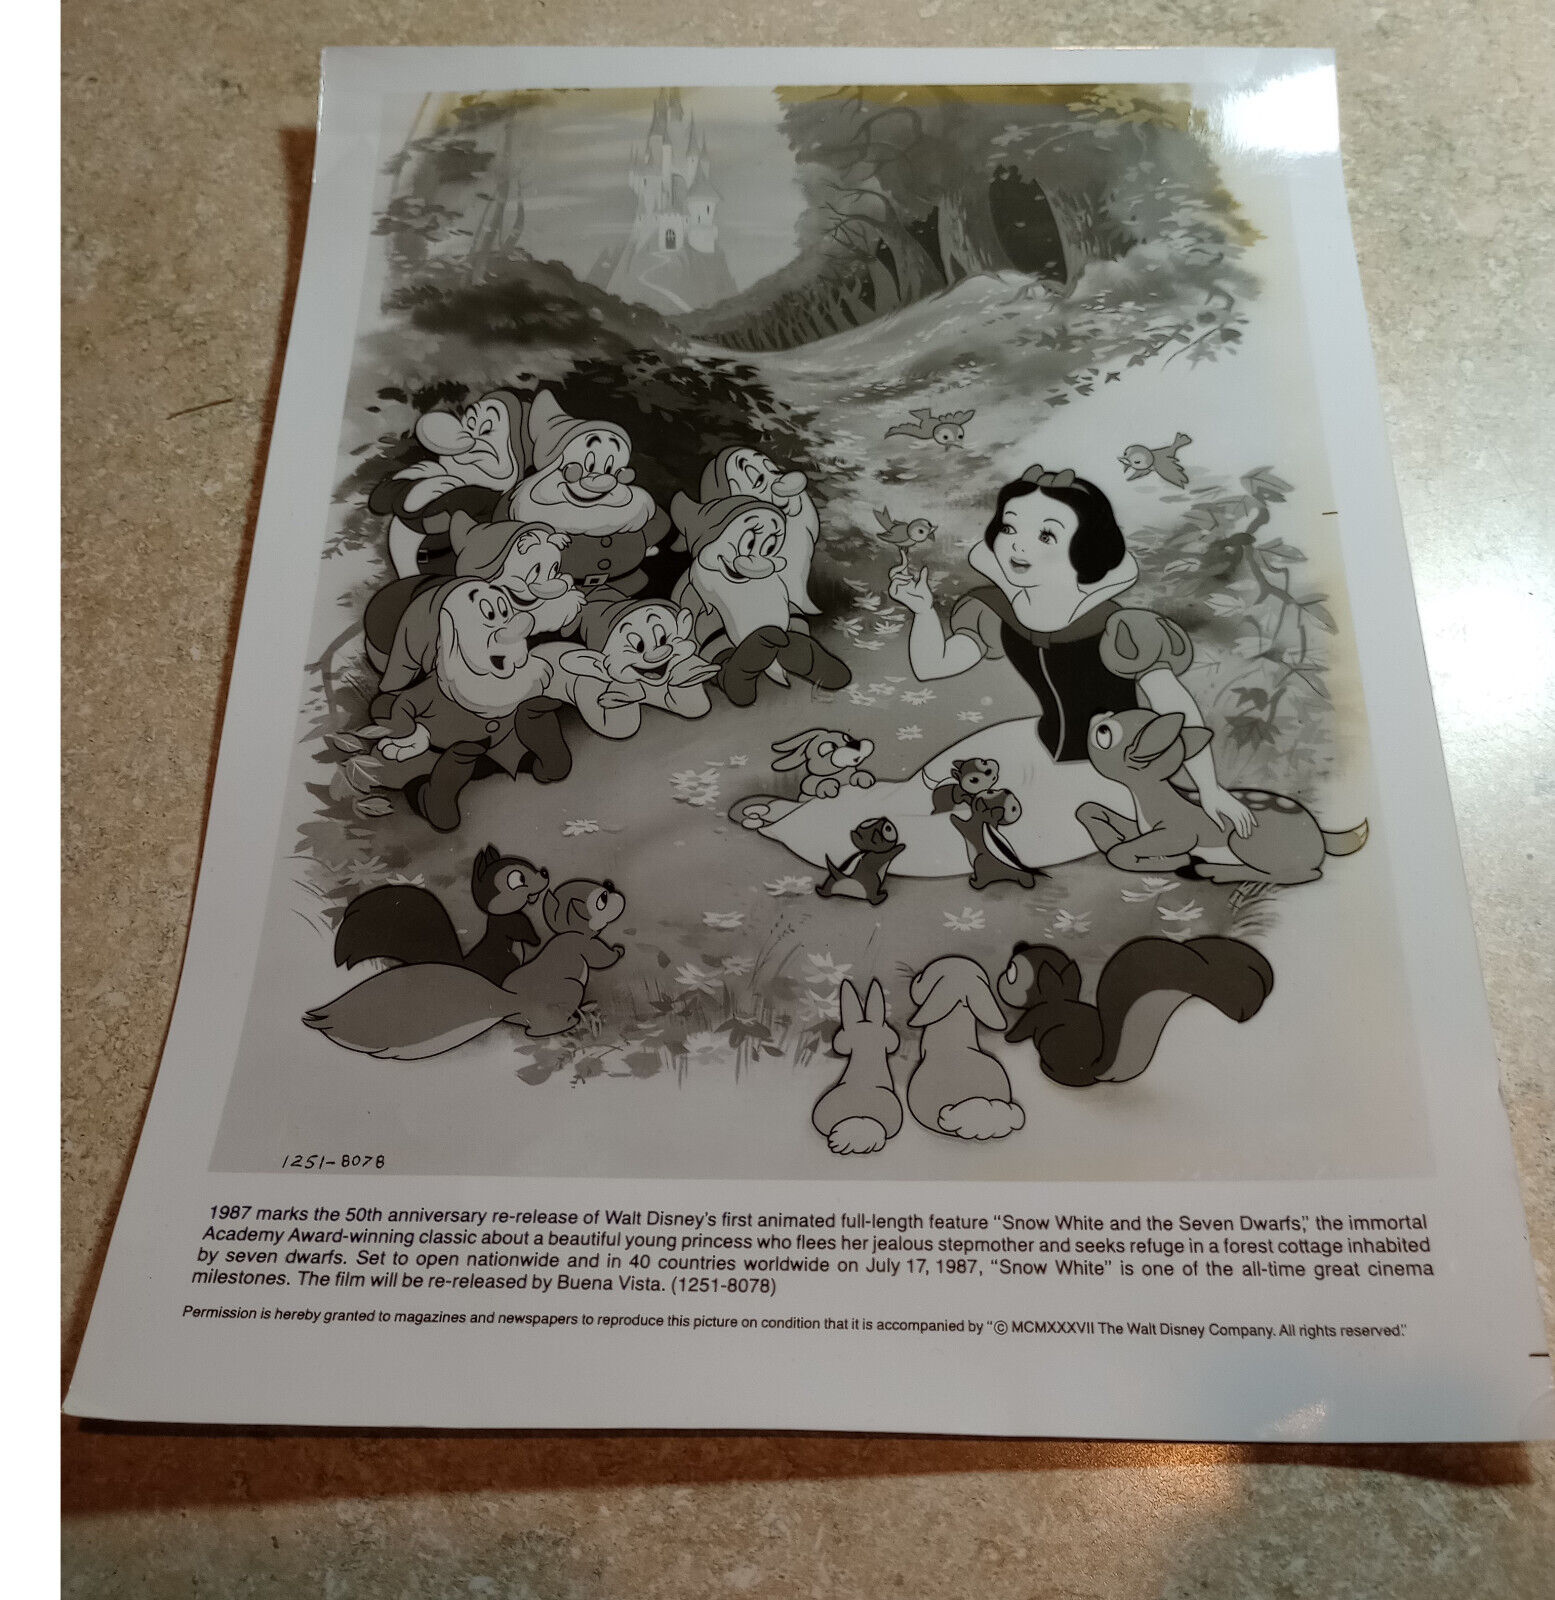 1987 Press Photo Snow White and the seven dwarfs 1251-8078